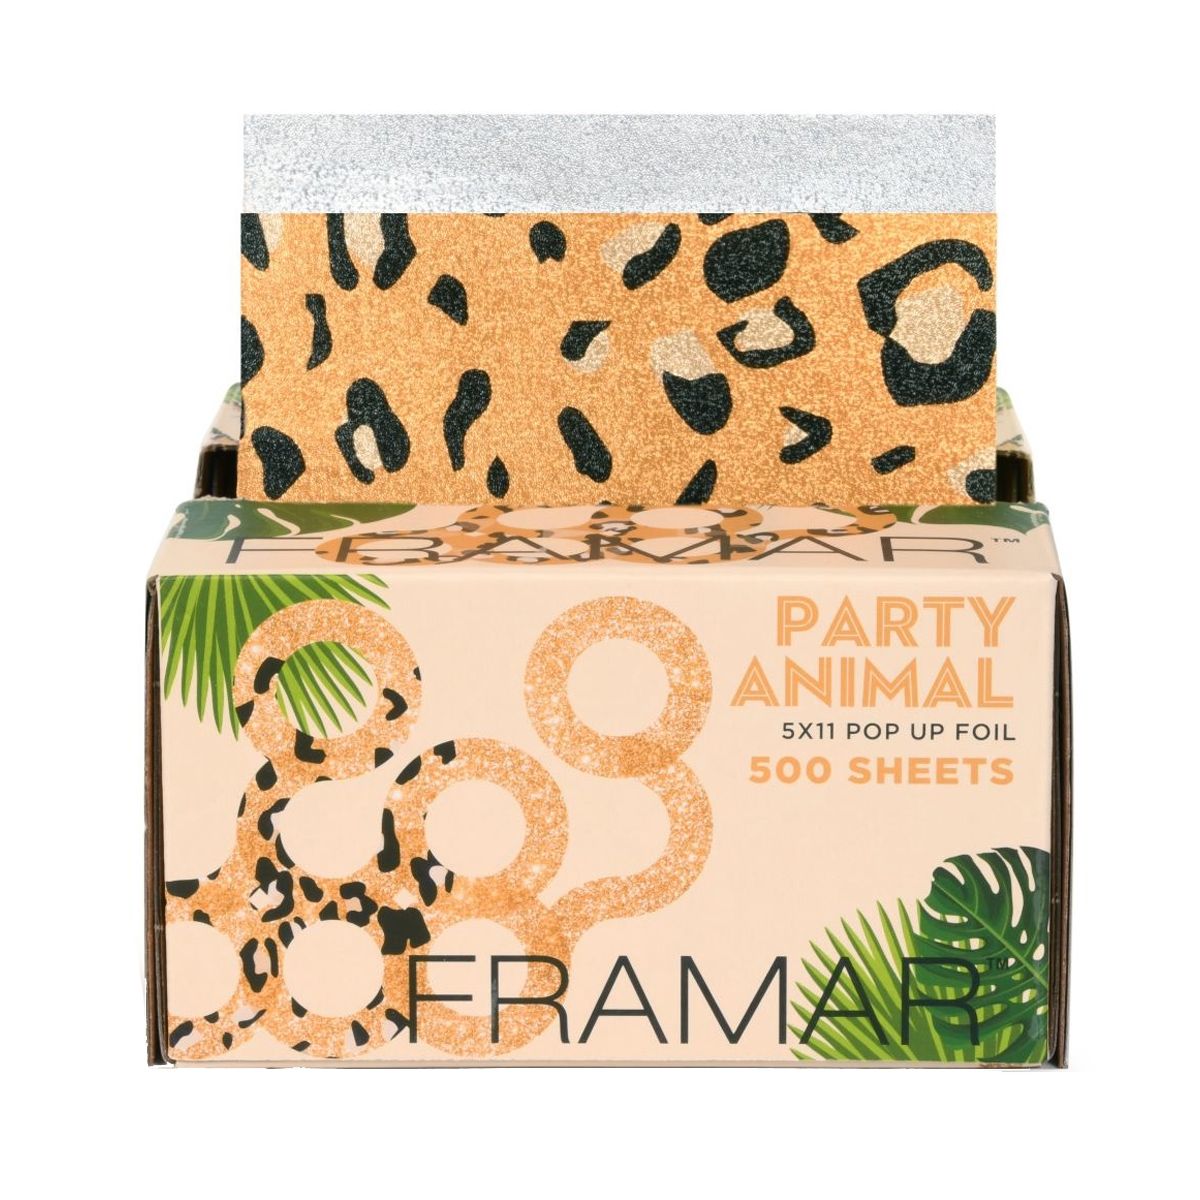 Framar Party Animal Pop Up Hair Foil, Aluminum Foil Sheets, Hair Foils for Highlighting - 500 Foil Sheets